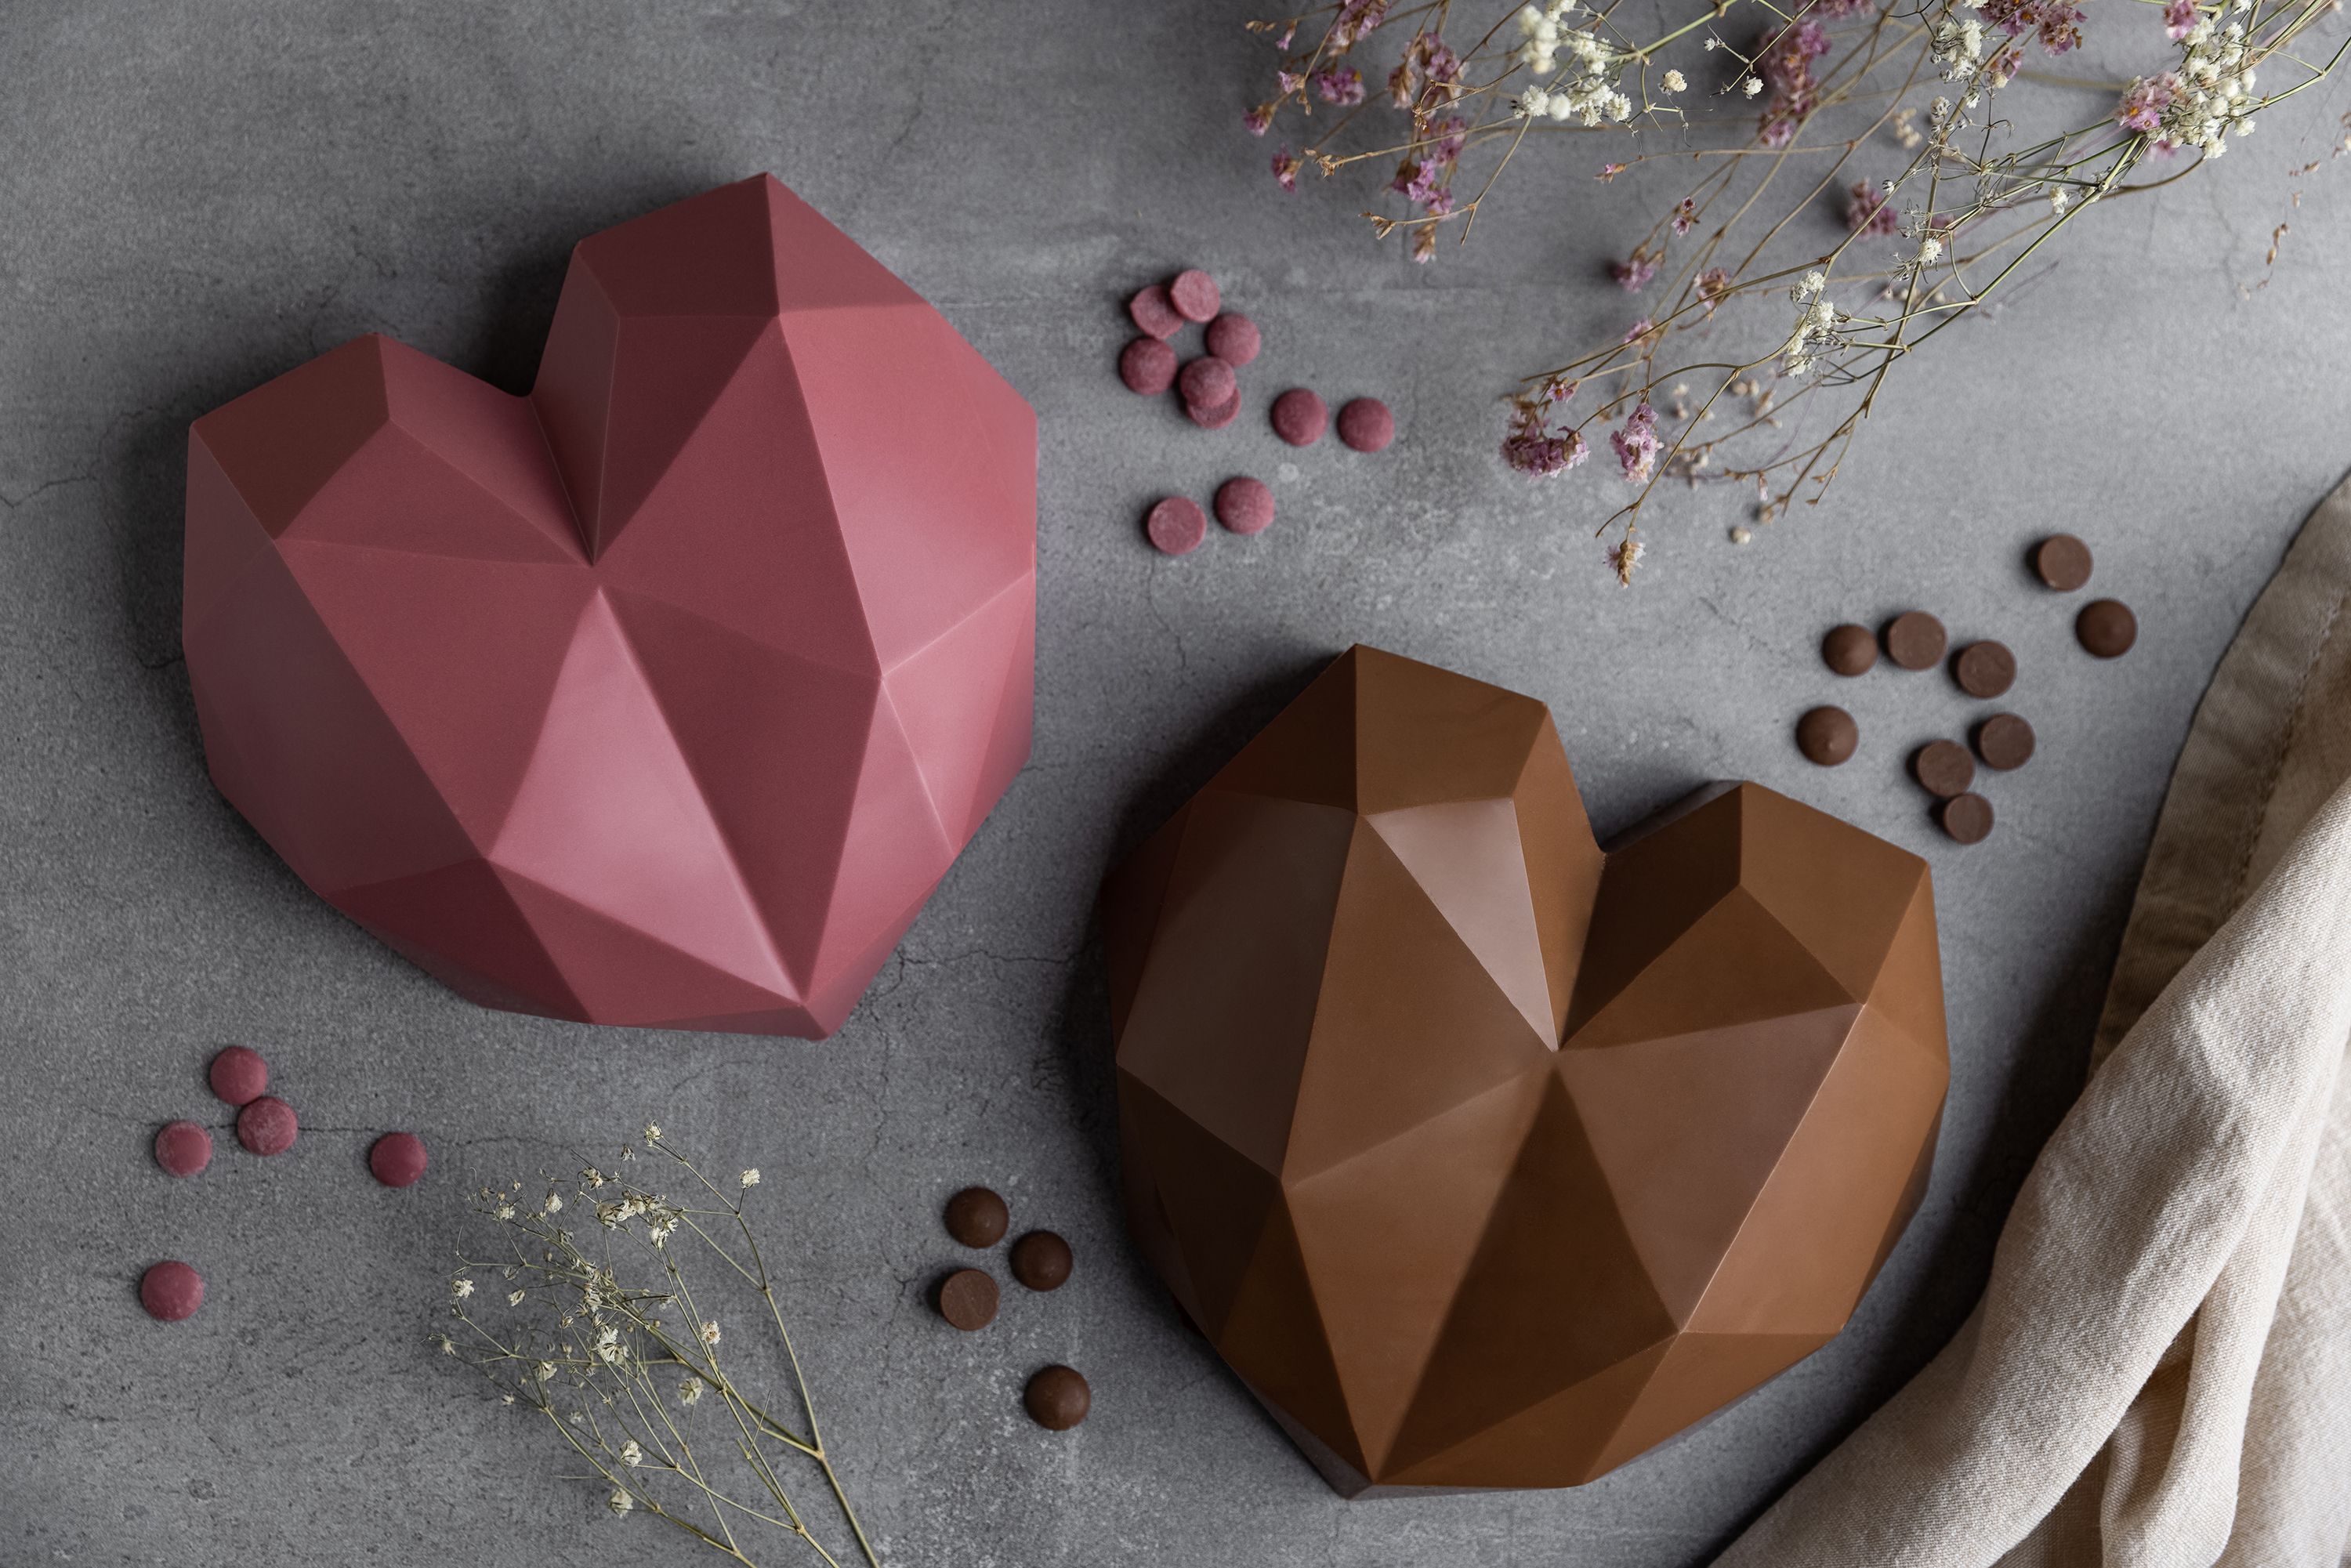 Zwei 3D-Diamantherzen aus Schokolade